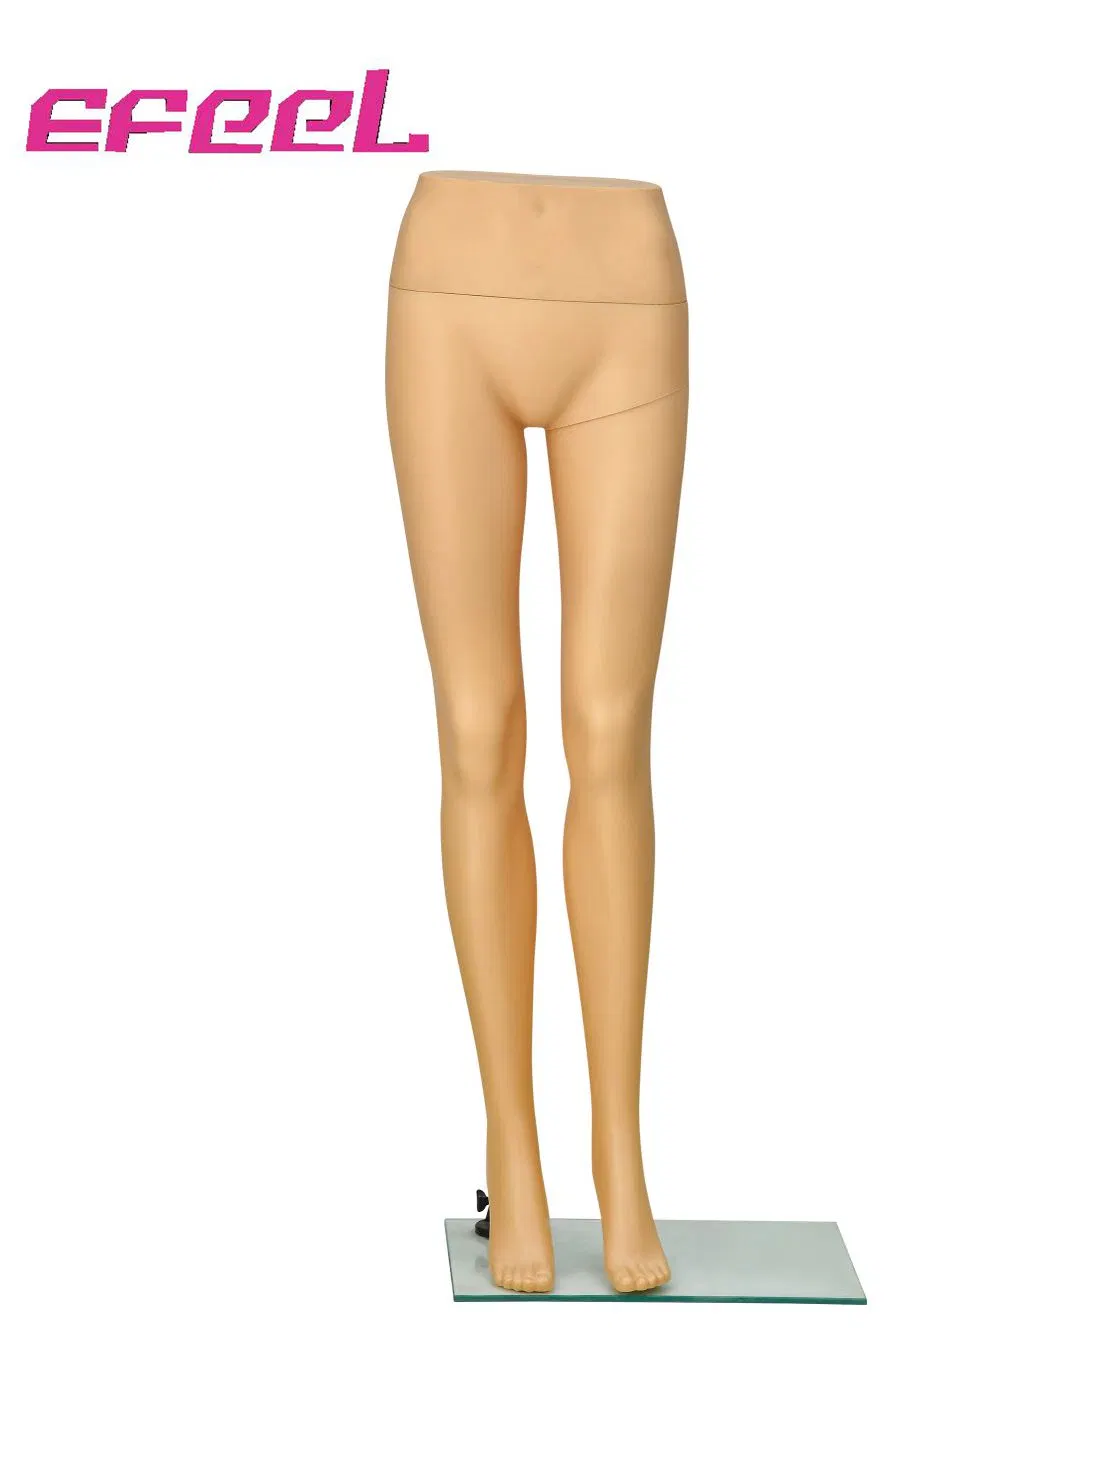 Pants Plastic Display Fashion Female Half Bottom Polypropylene Mannequins